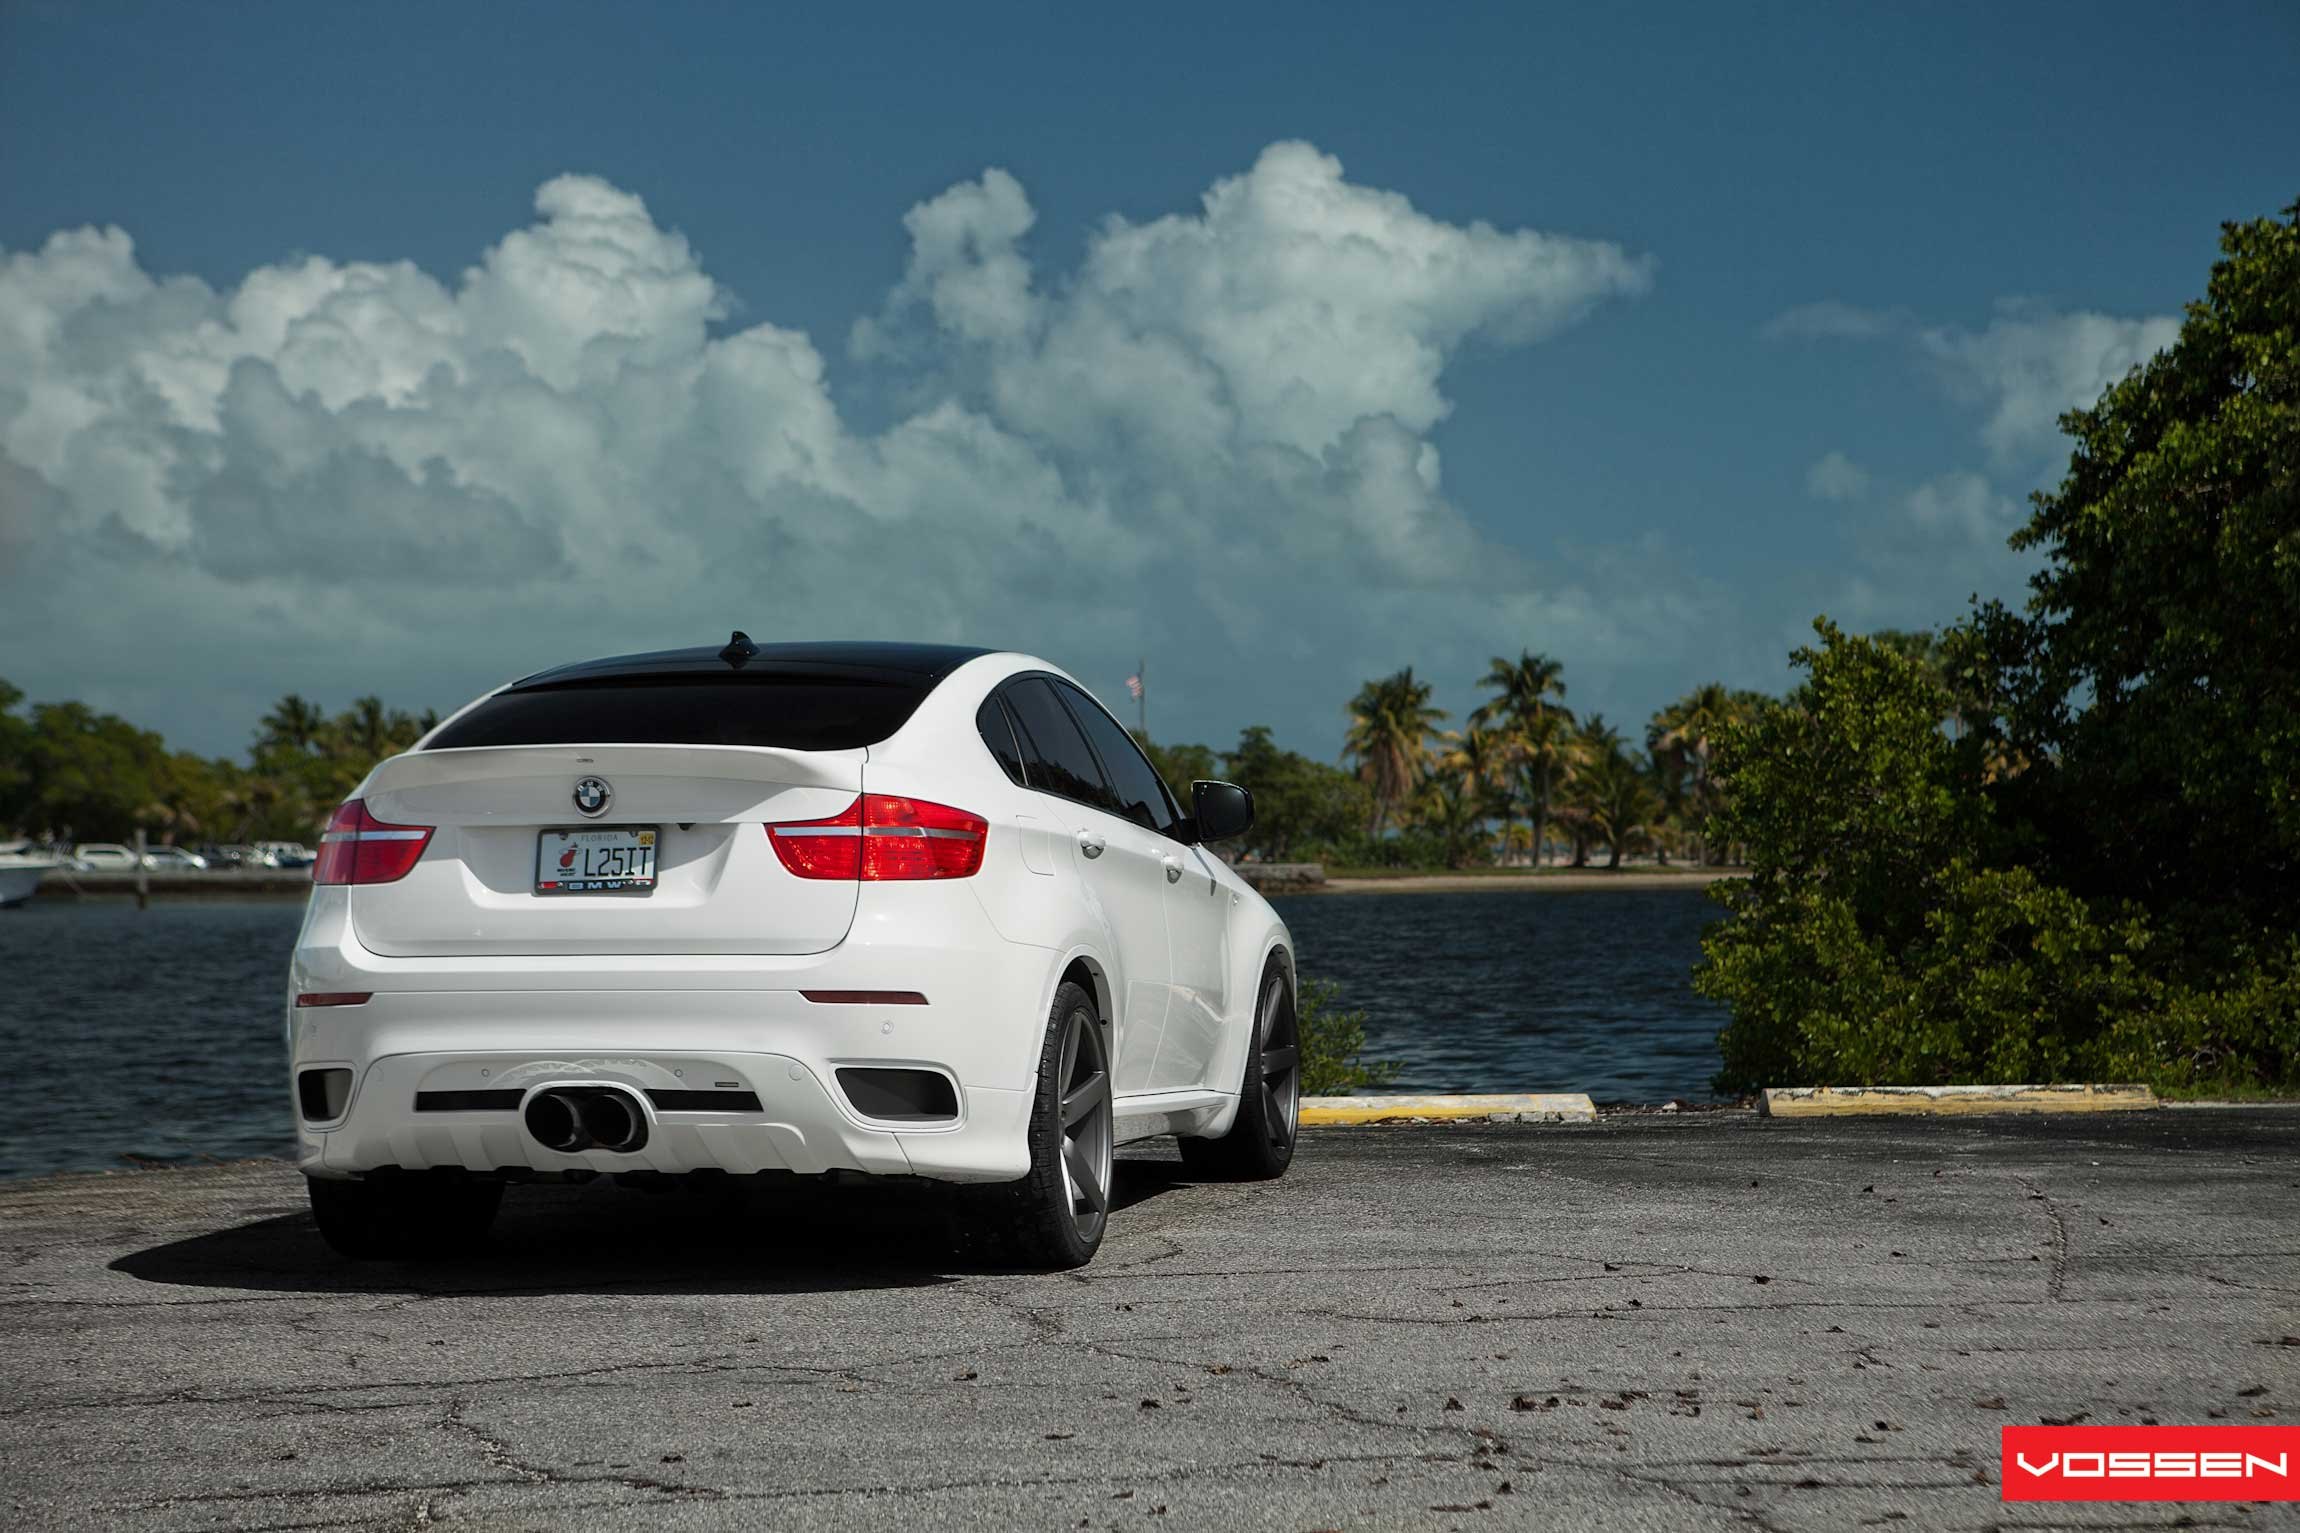 Custom Rear Diffuser on White BMW X6 - Photo by Vossen